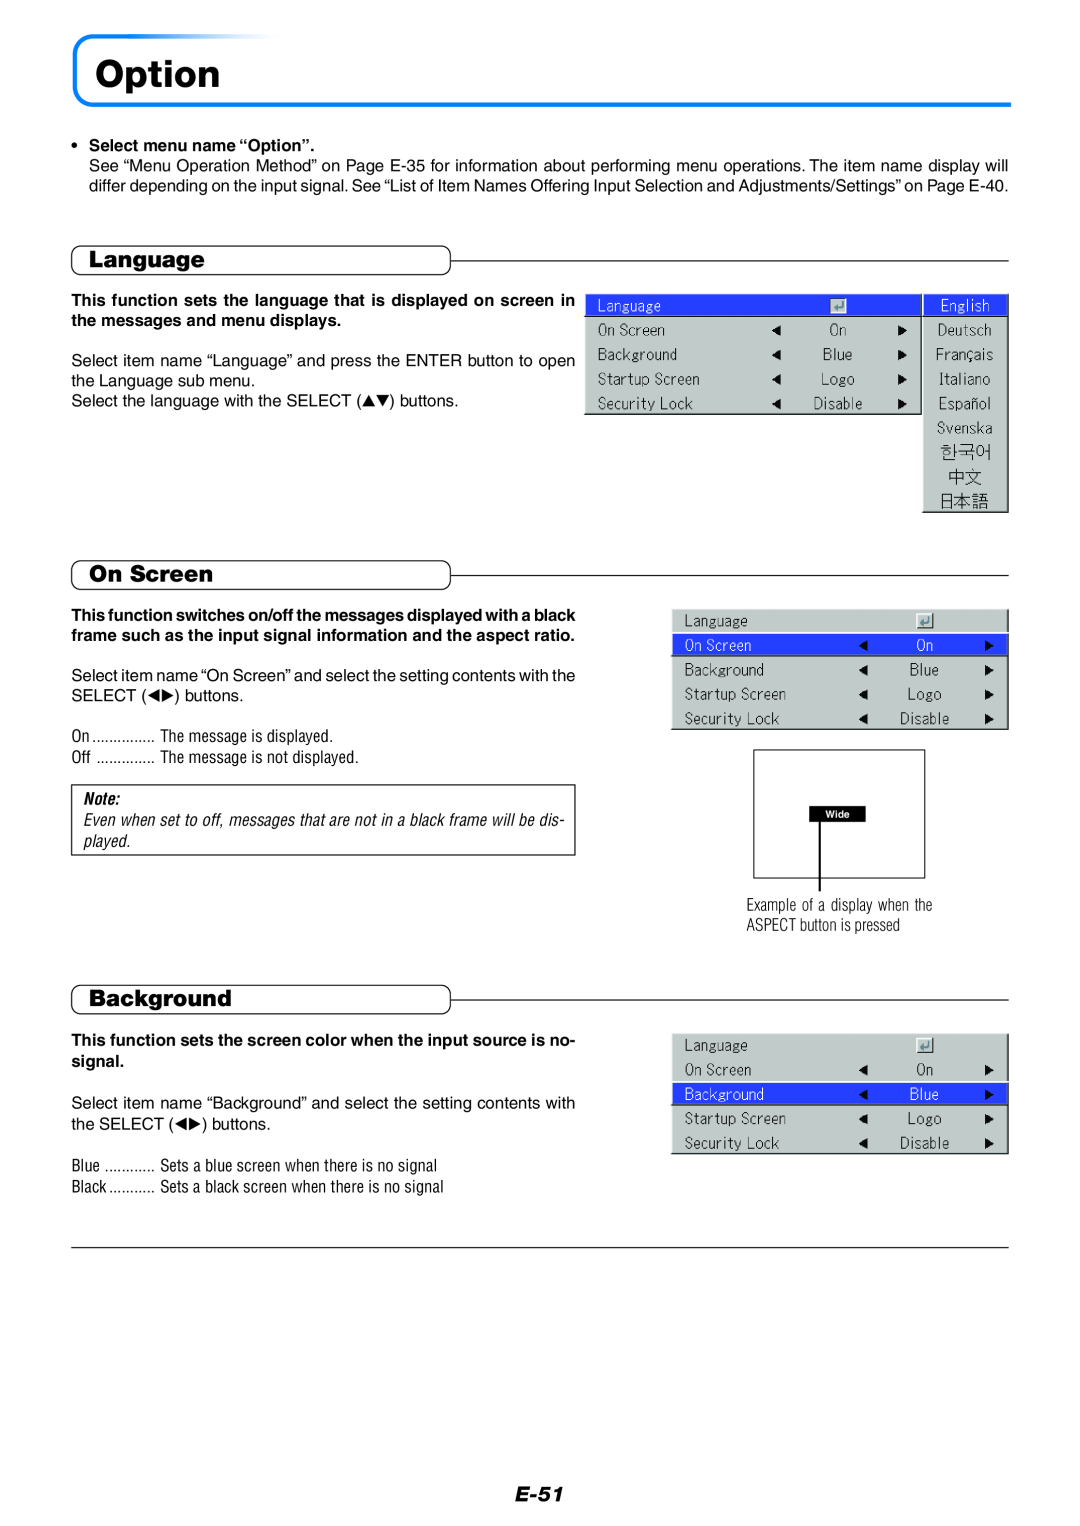 PLUS Vision U4-232 user manual Language, On Screen, Background, E-51, Select menu name “Option” 